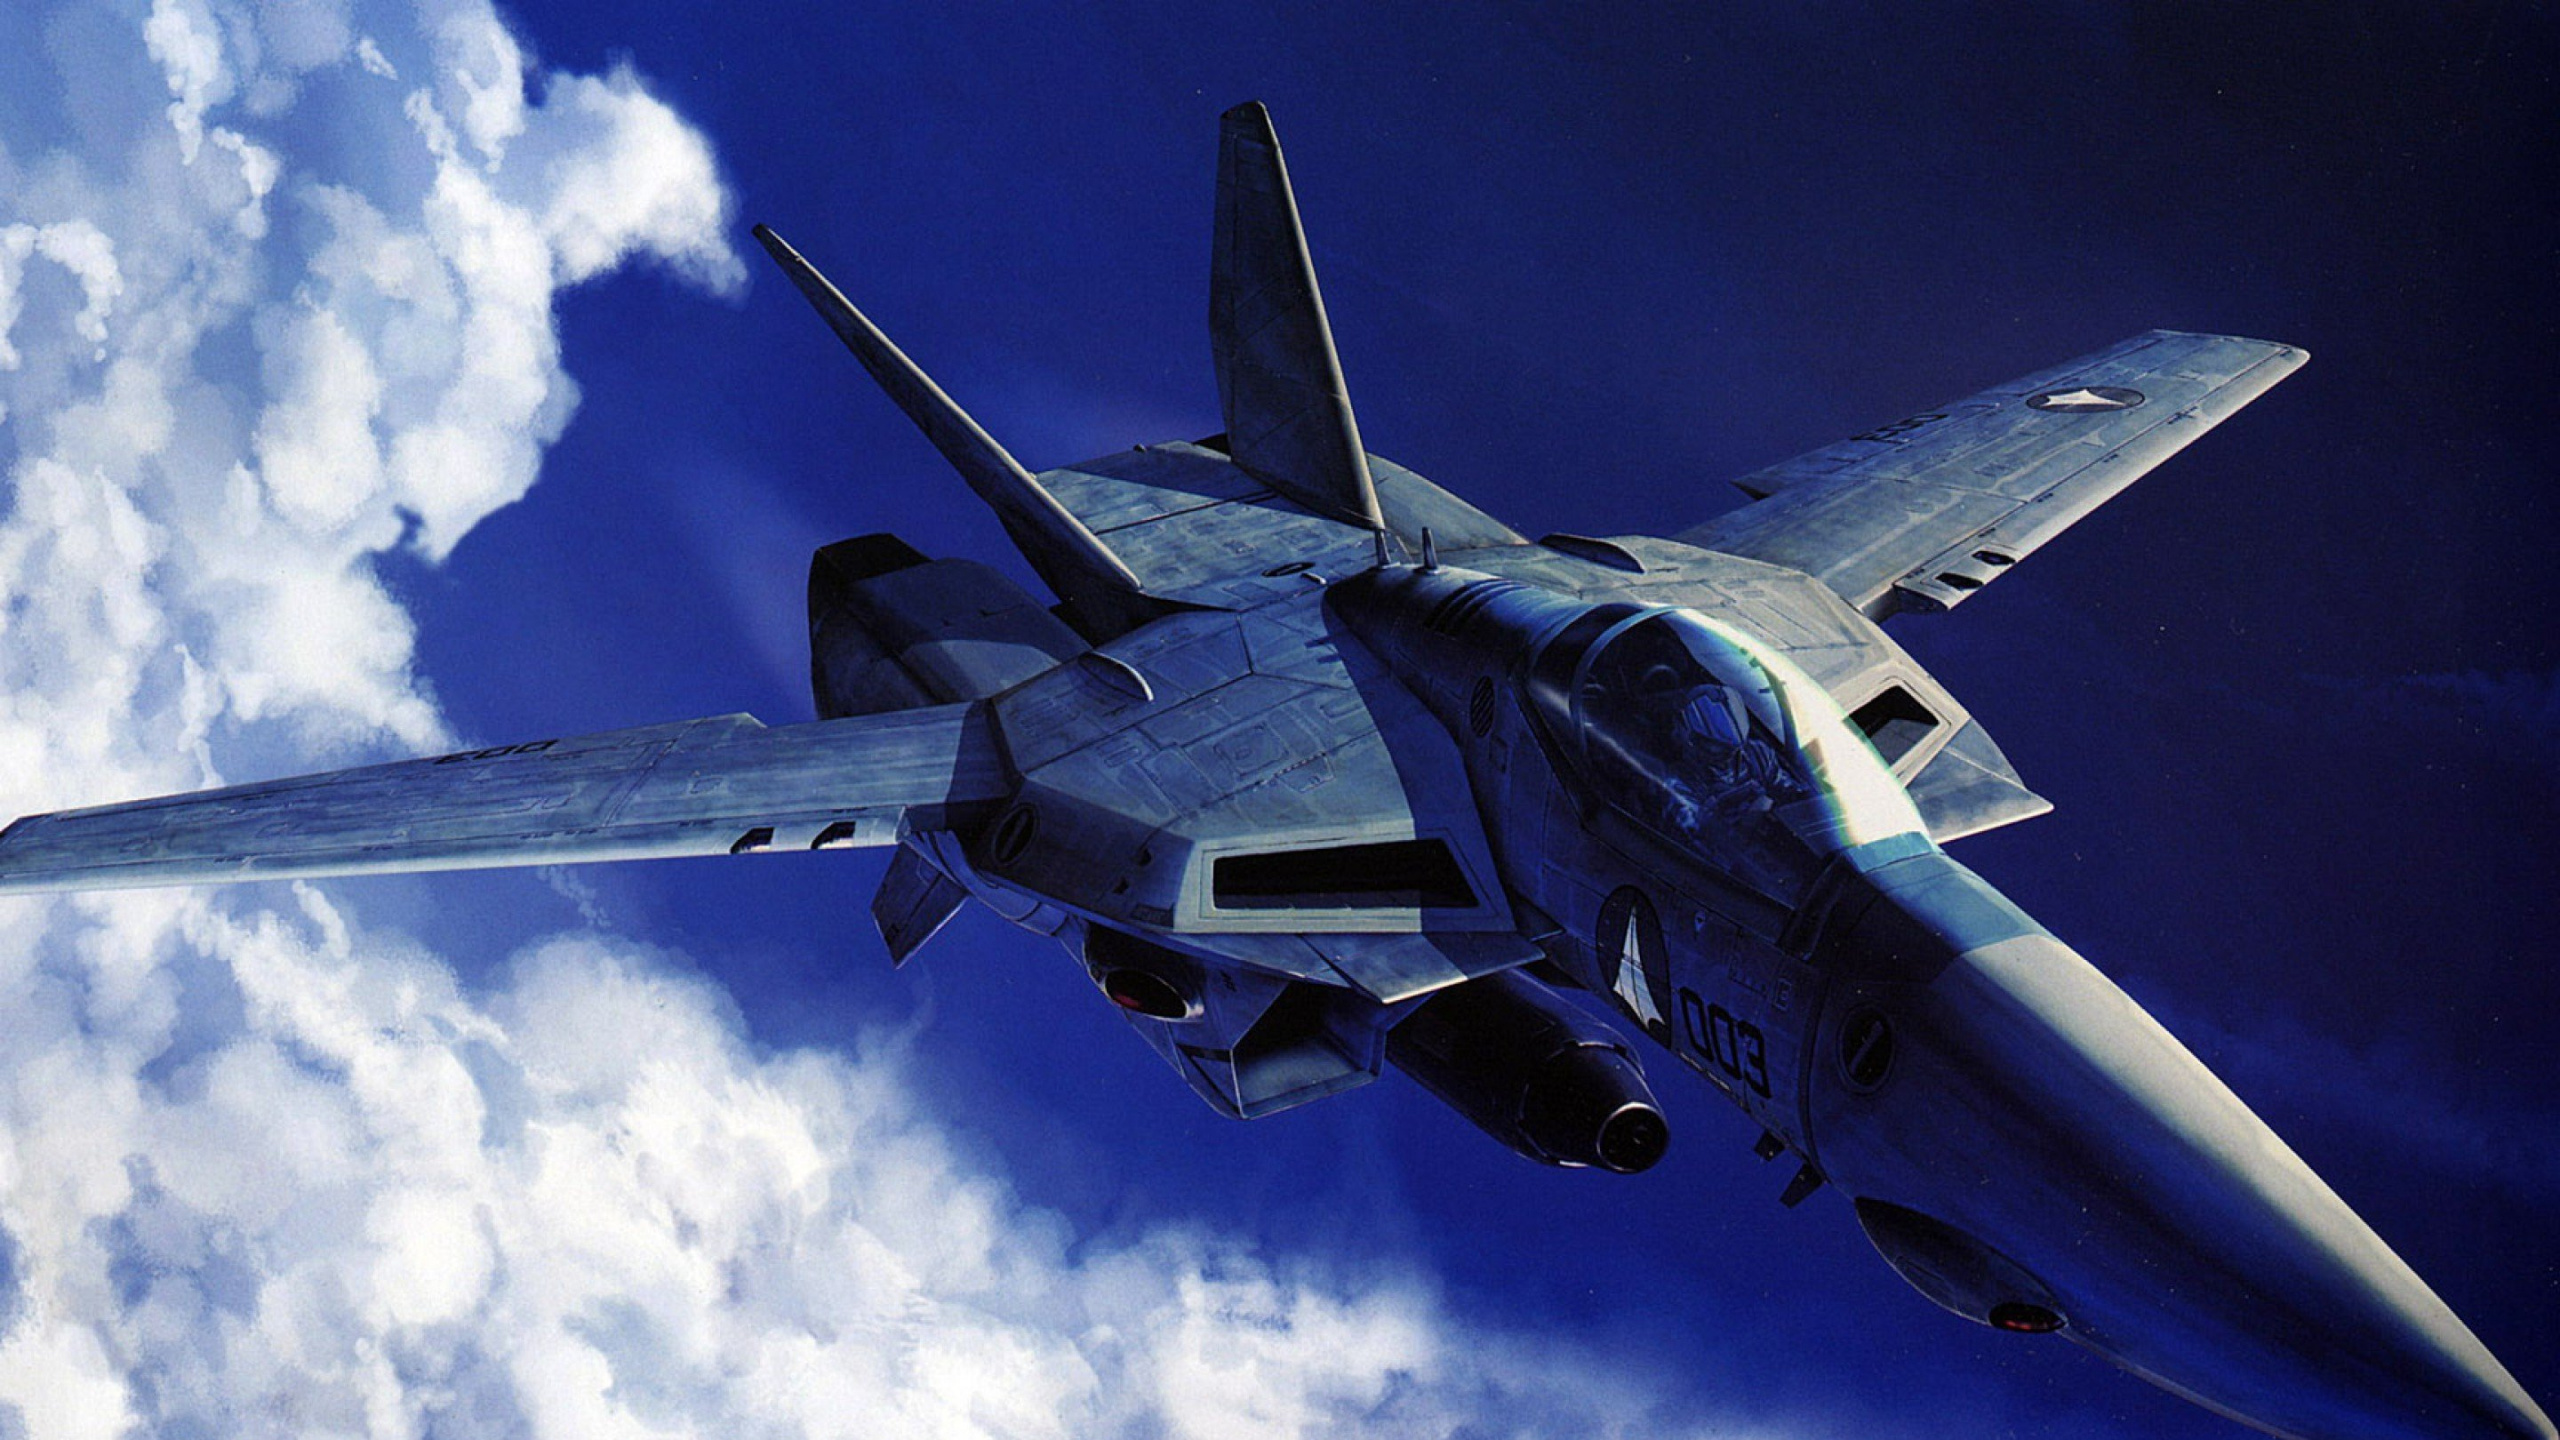 Grauer Kampfjet, Der Tagsüber in Den Himmel Fliegt. Wallpaper in 2560x1440 Resolution